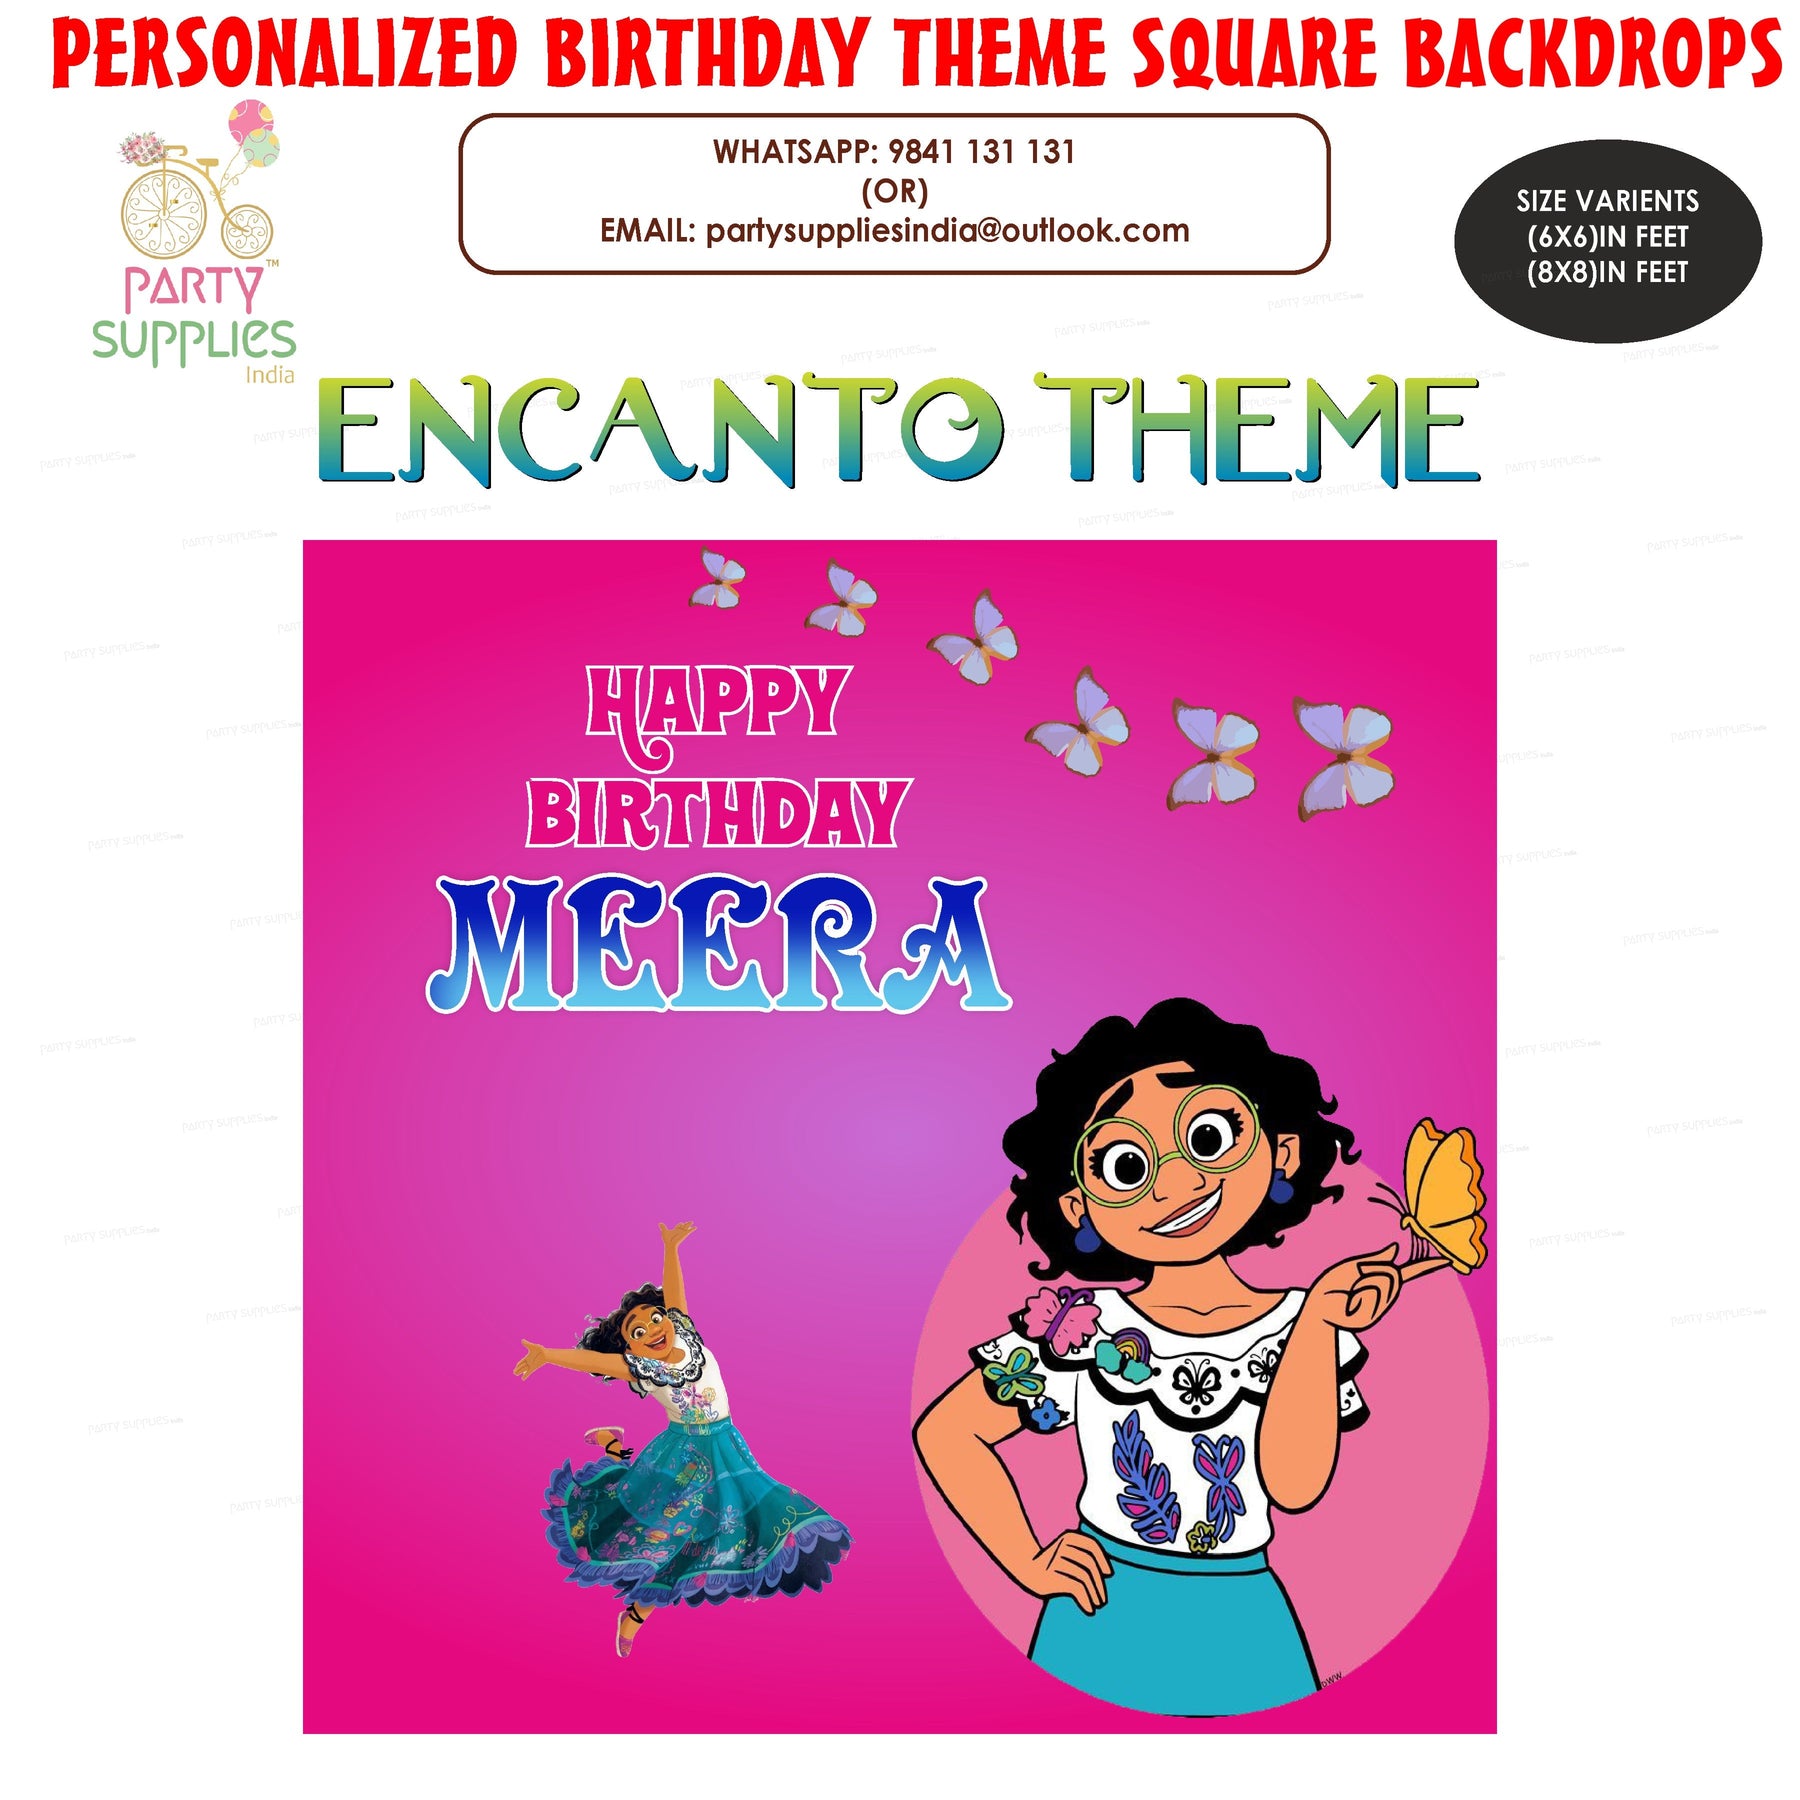 PSI Encanto Theme Customized Square Backdrop